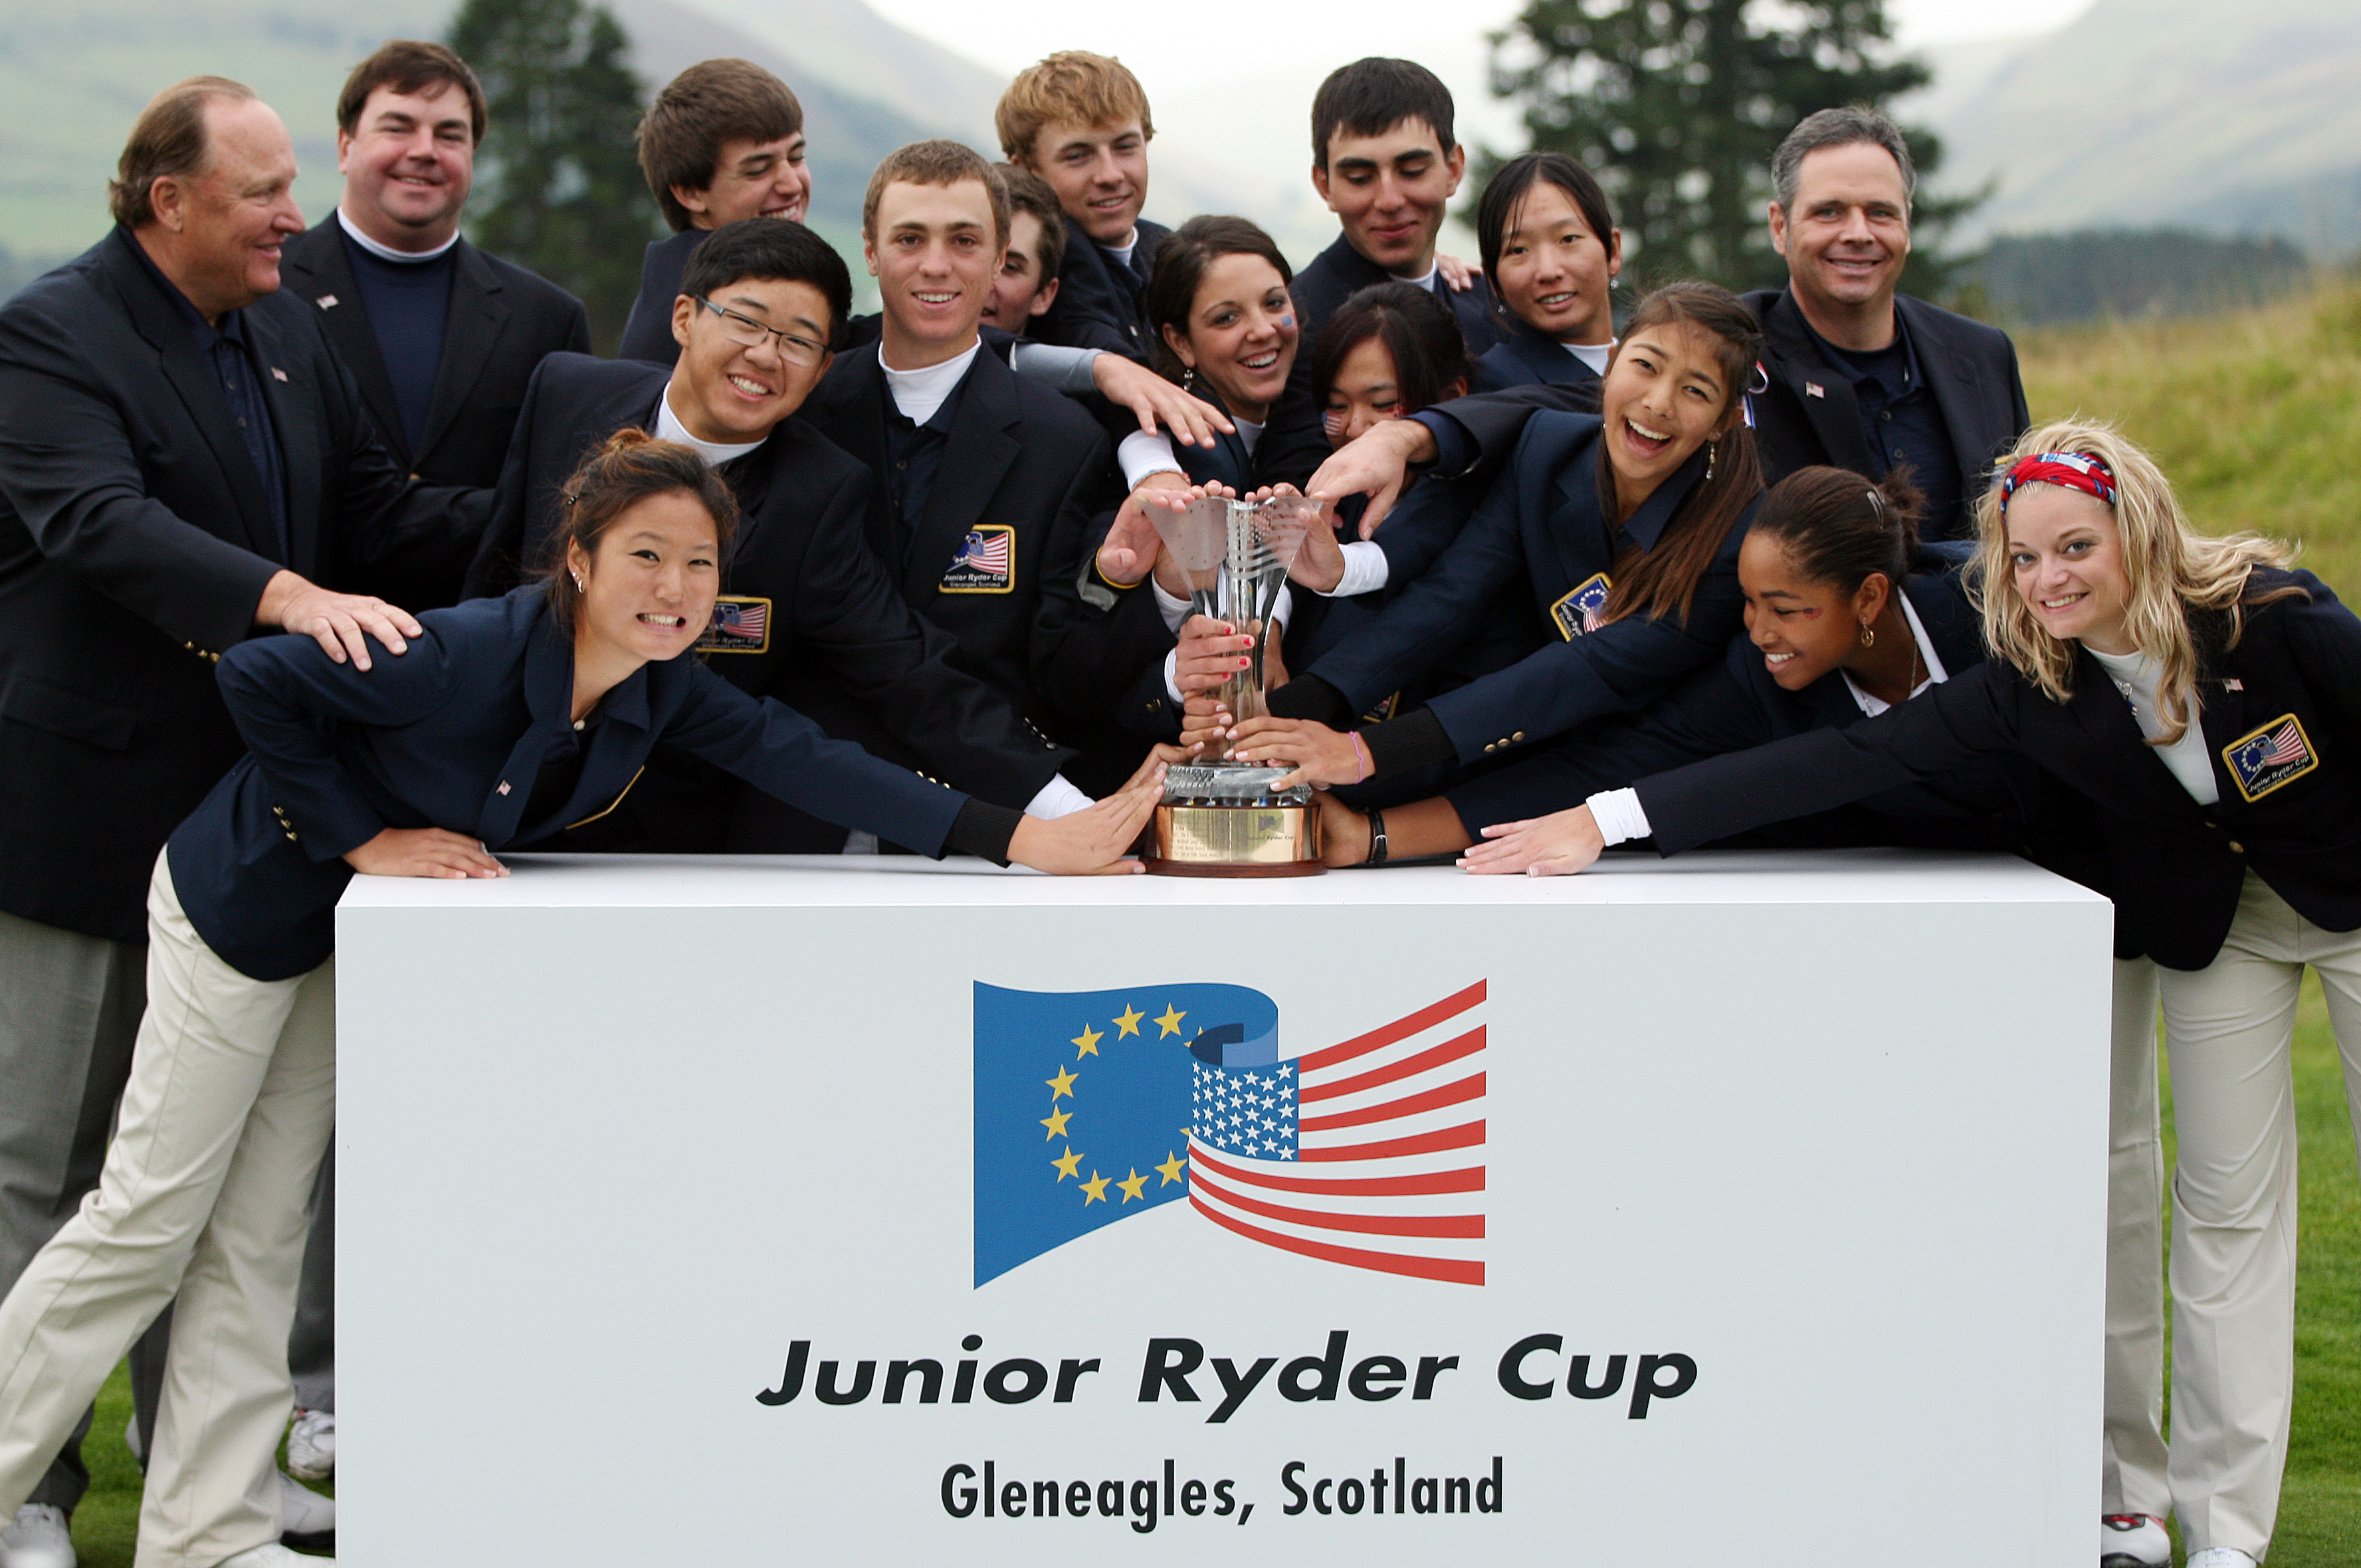 Junior Ryder Cup Returning To Scotland Golf, by TourMiss